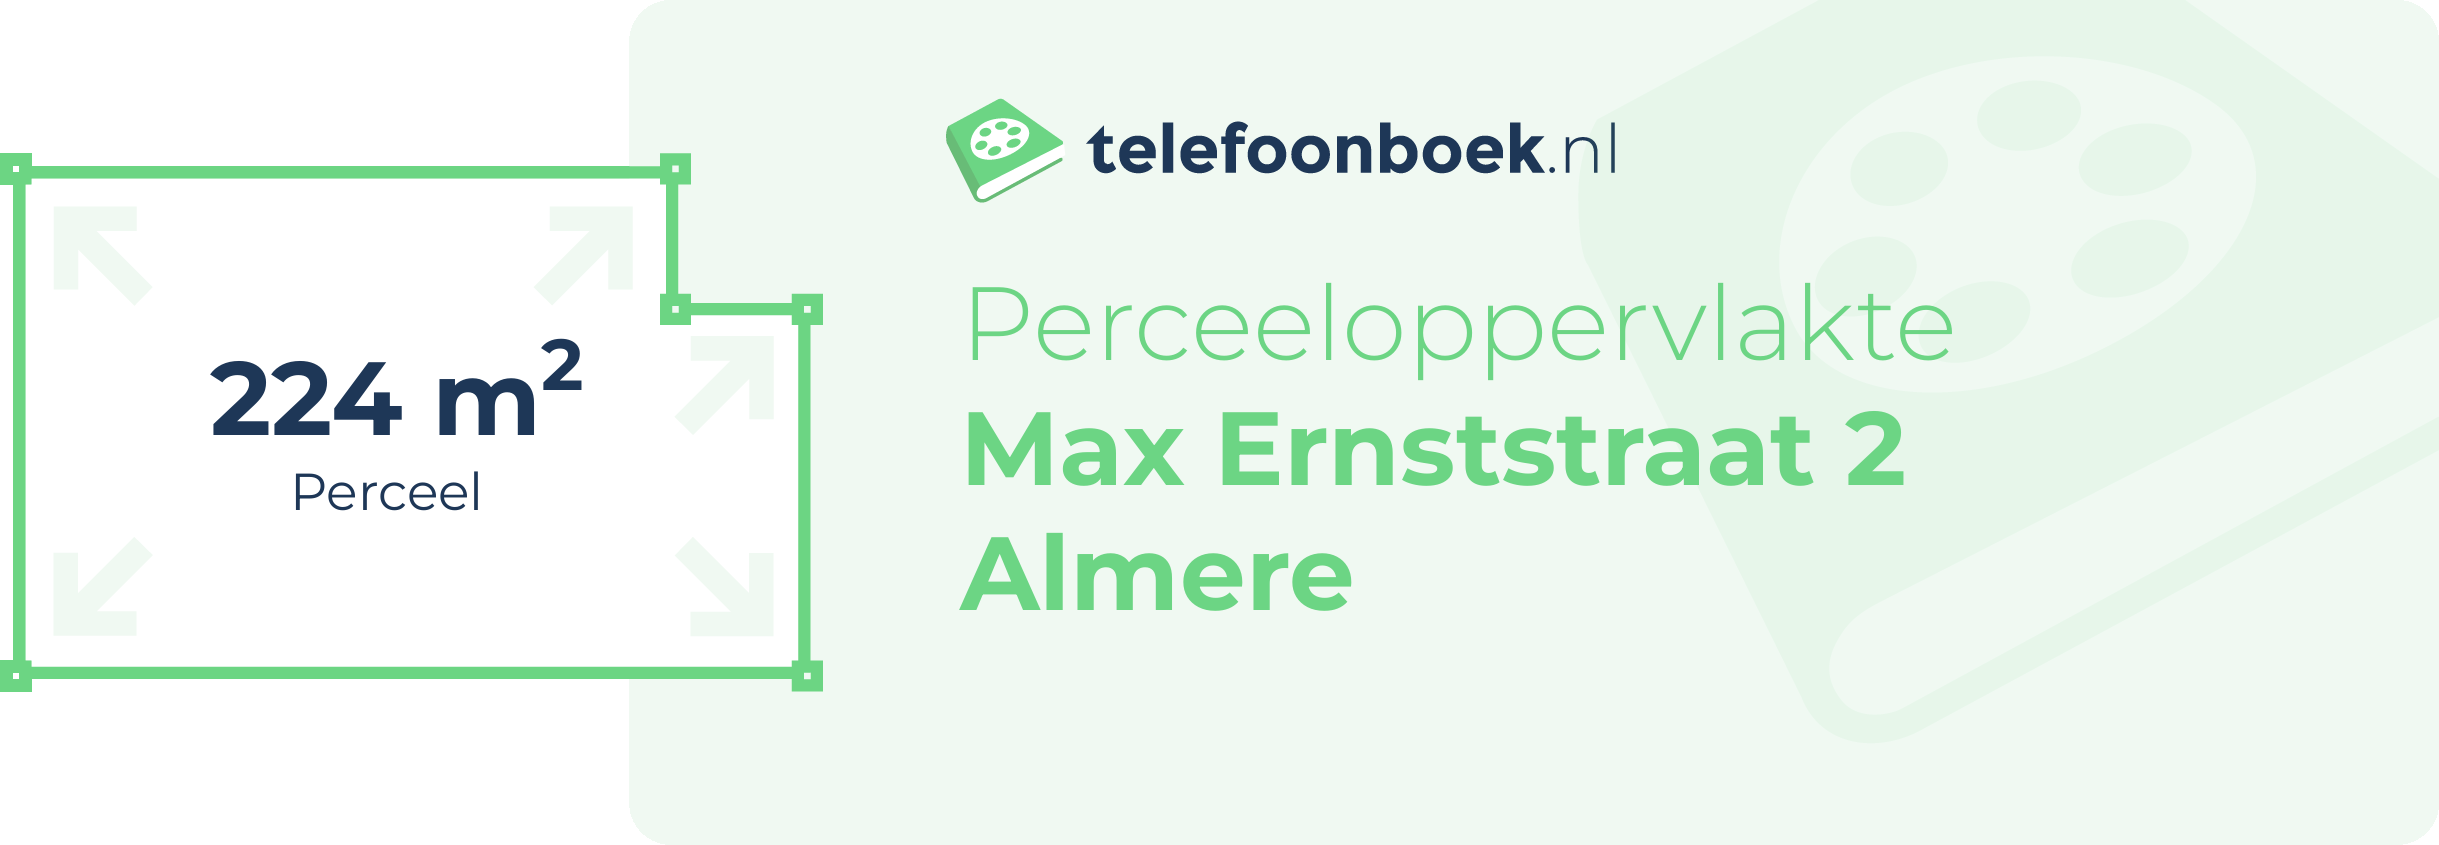 Perceeloppervlakte Max Ernststraat 2 Almere